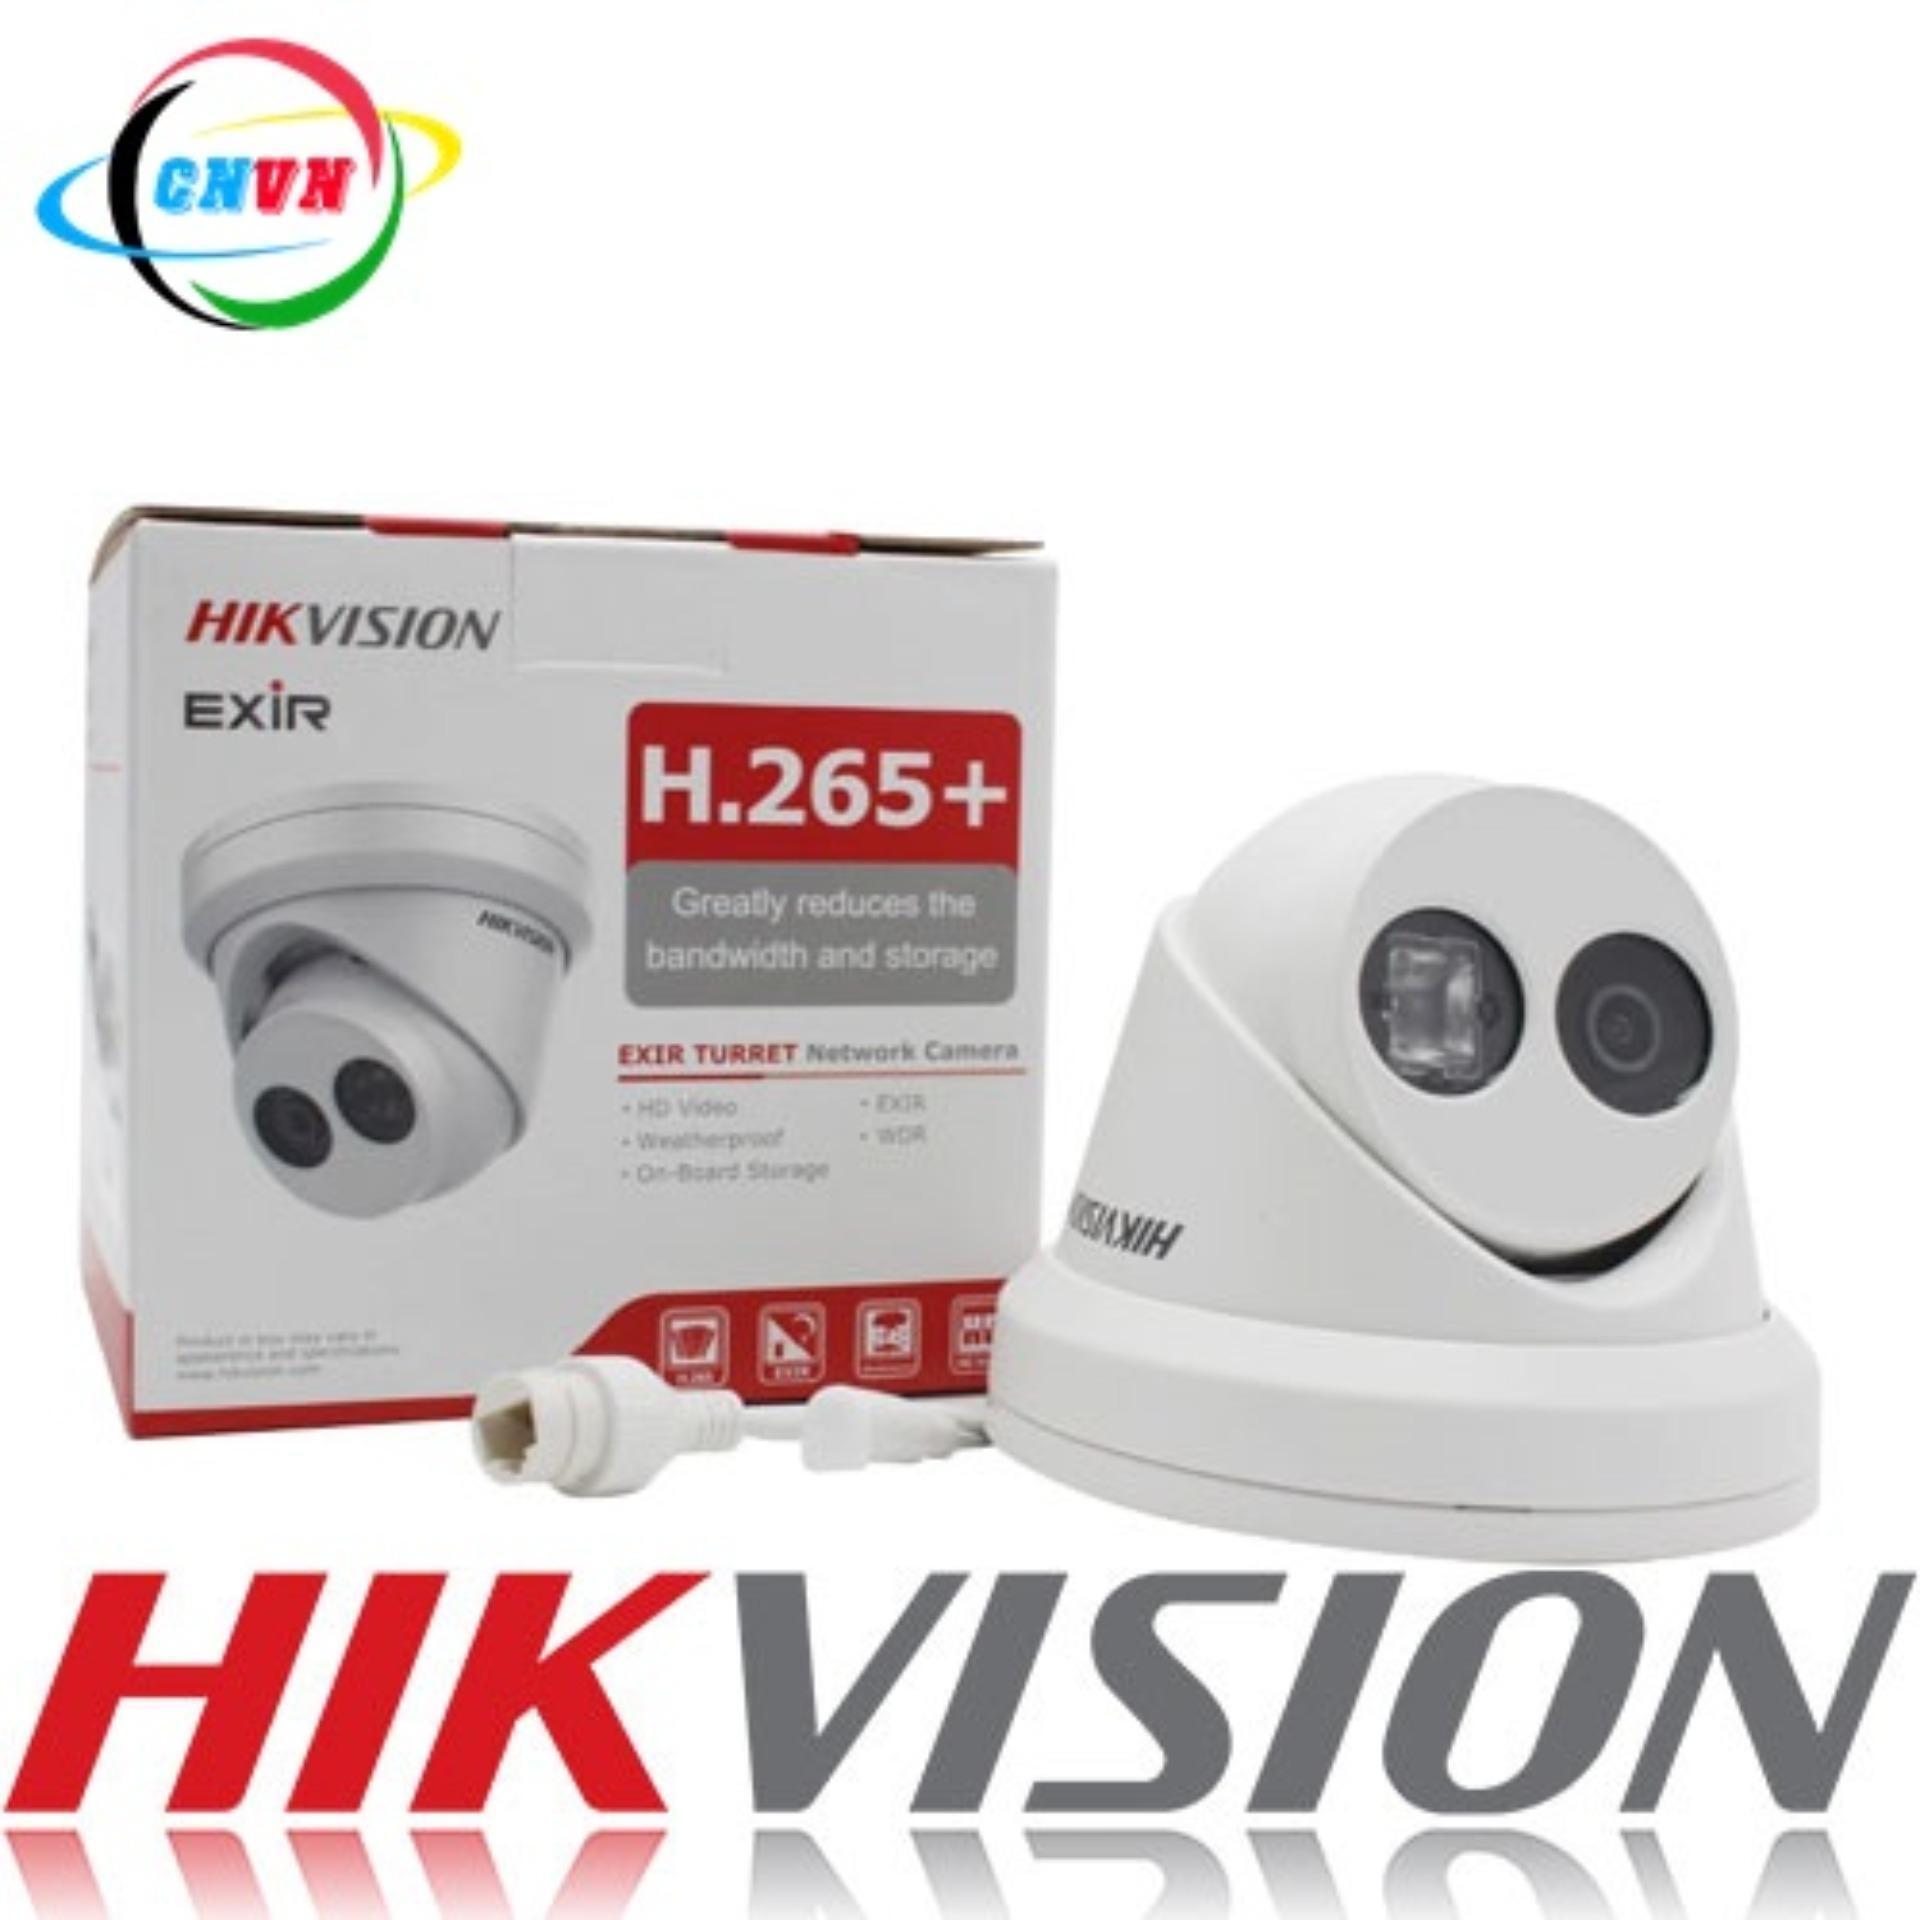 Camera IP Hikvision DS-2CD2343G0-I - 4MP